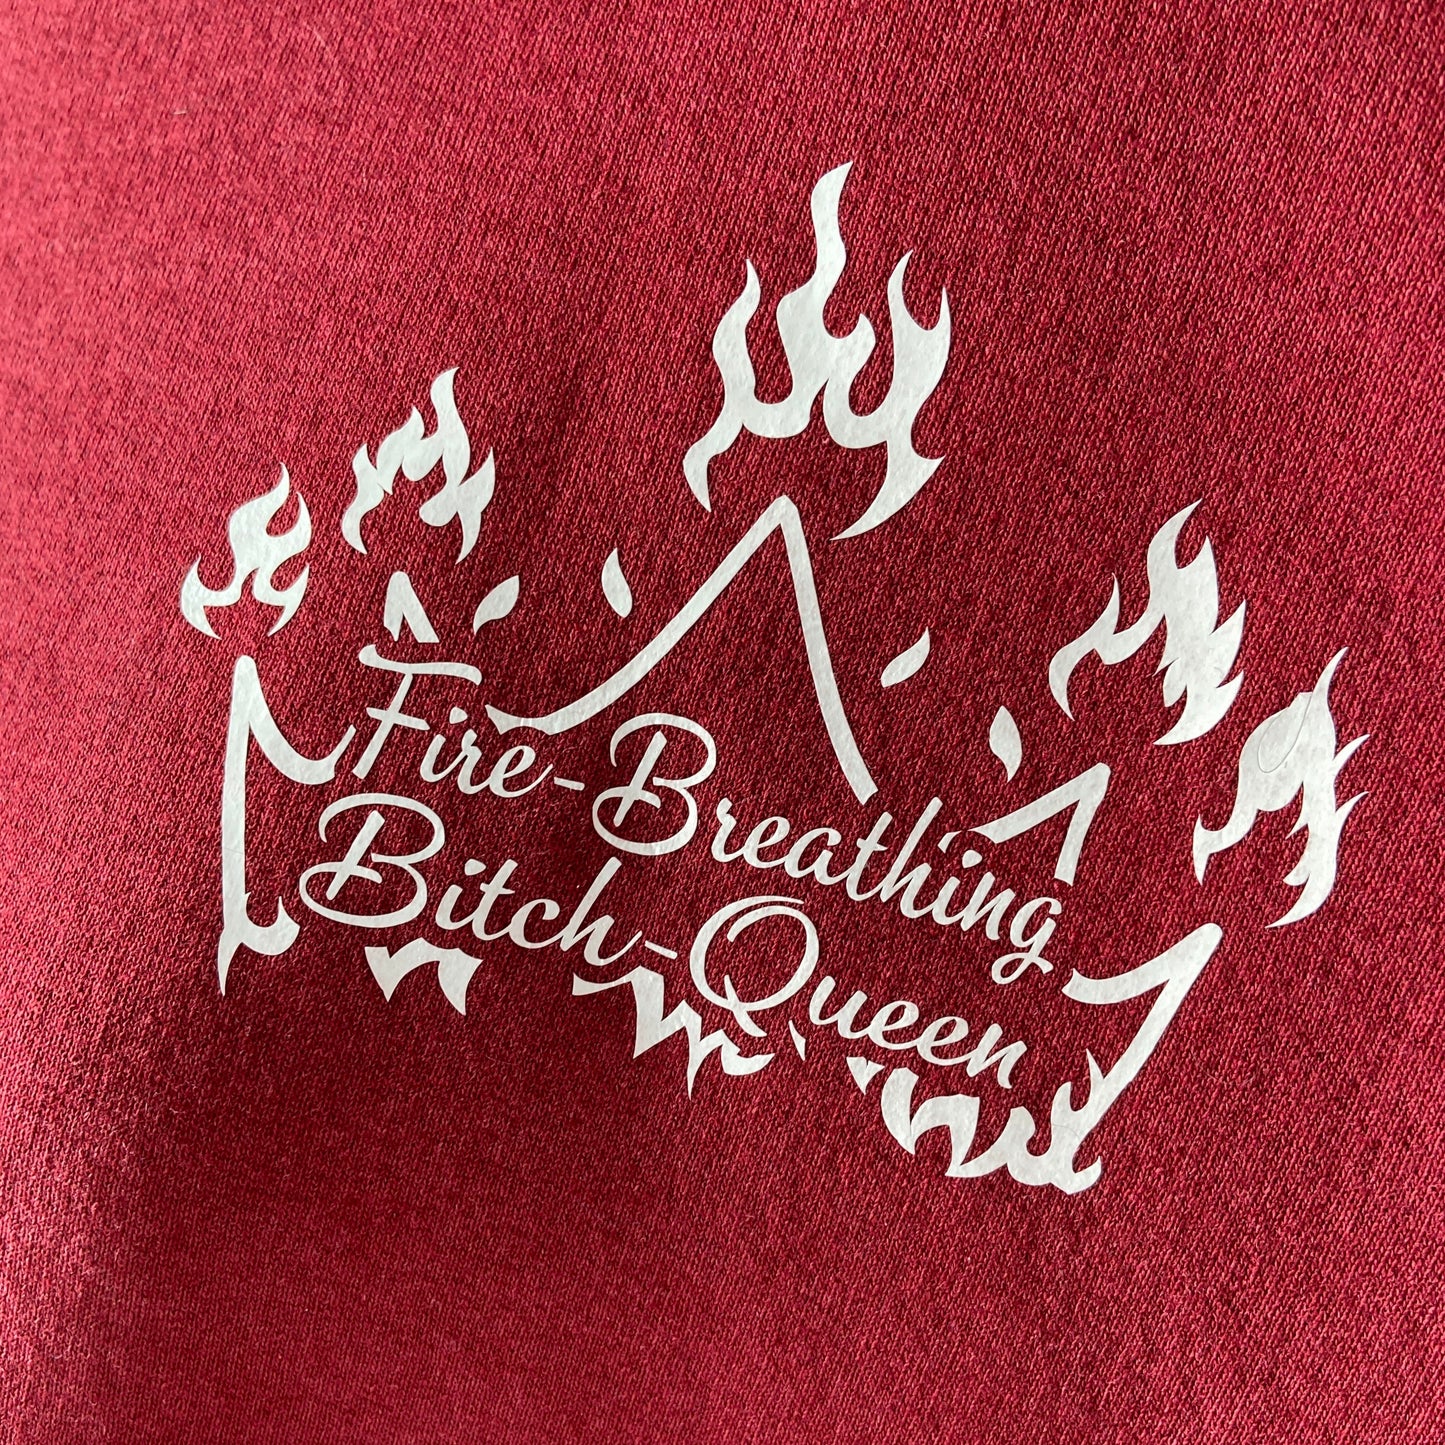 Fire-Breathing Bitch-Queen Sweatshirt